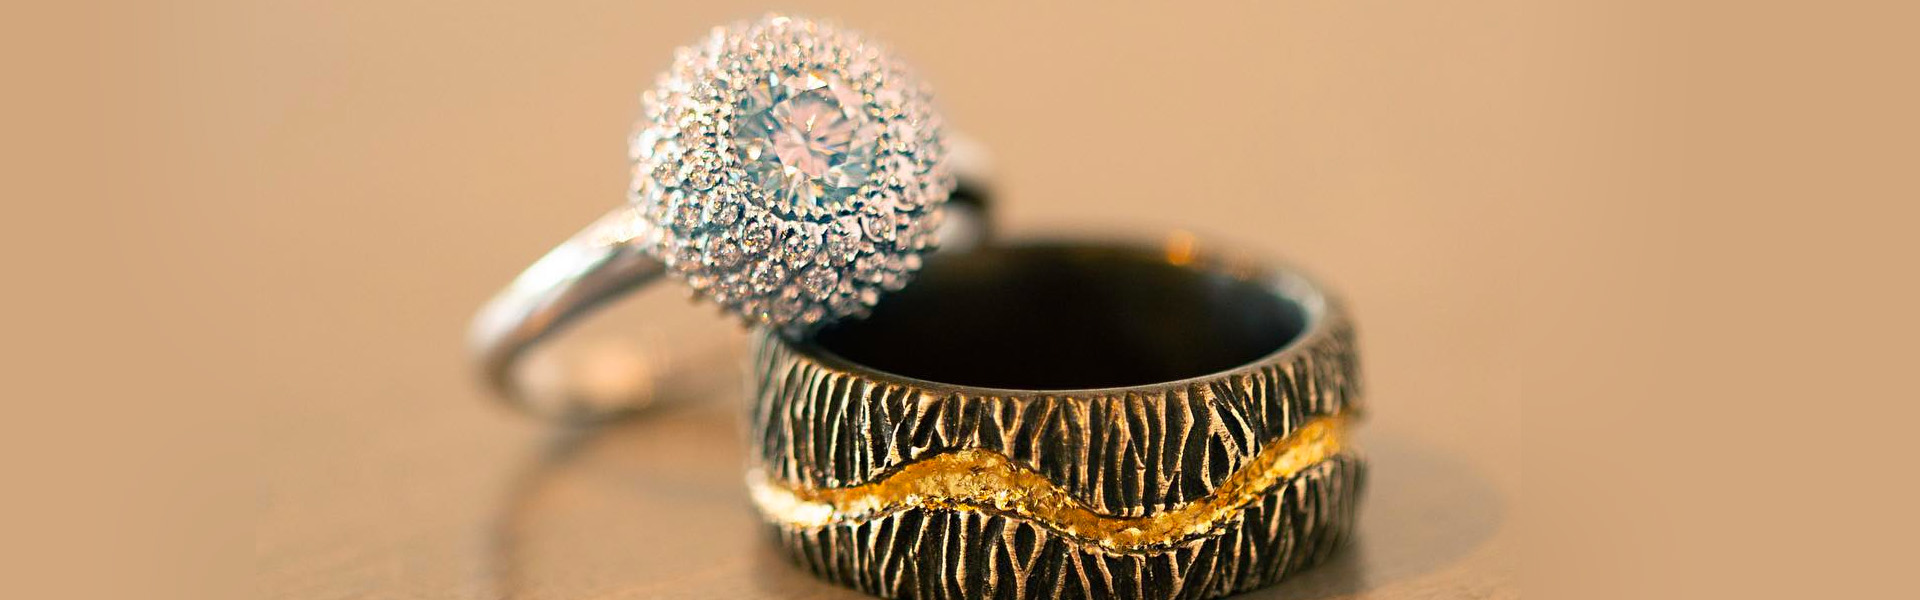 5 Stone Diamond Ring , 3 Carat All GIA Certified – Kingofjewelry.com